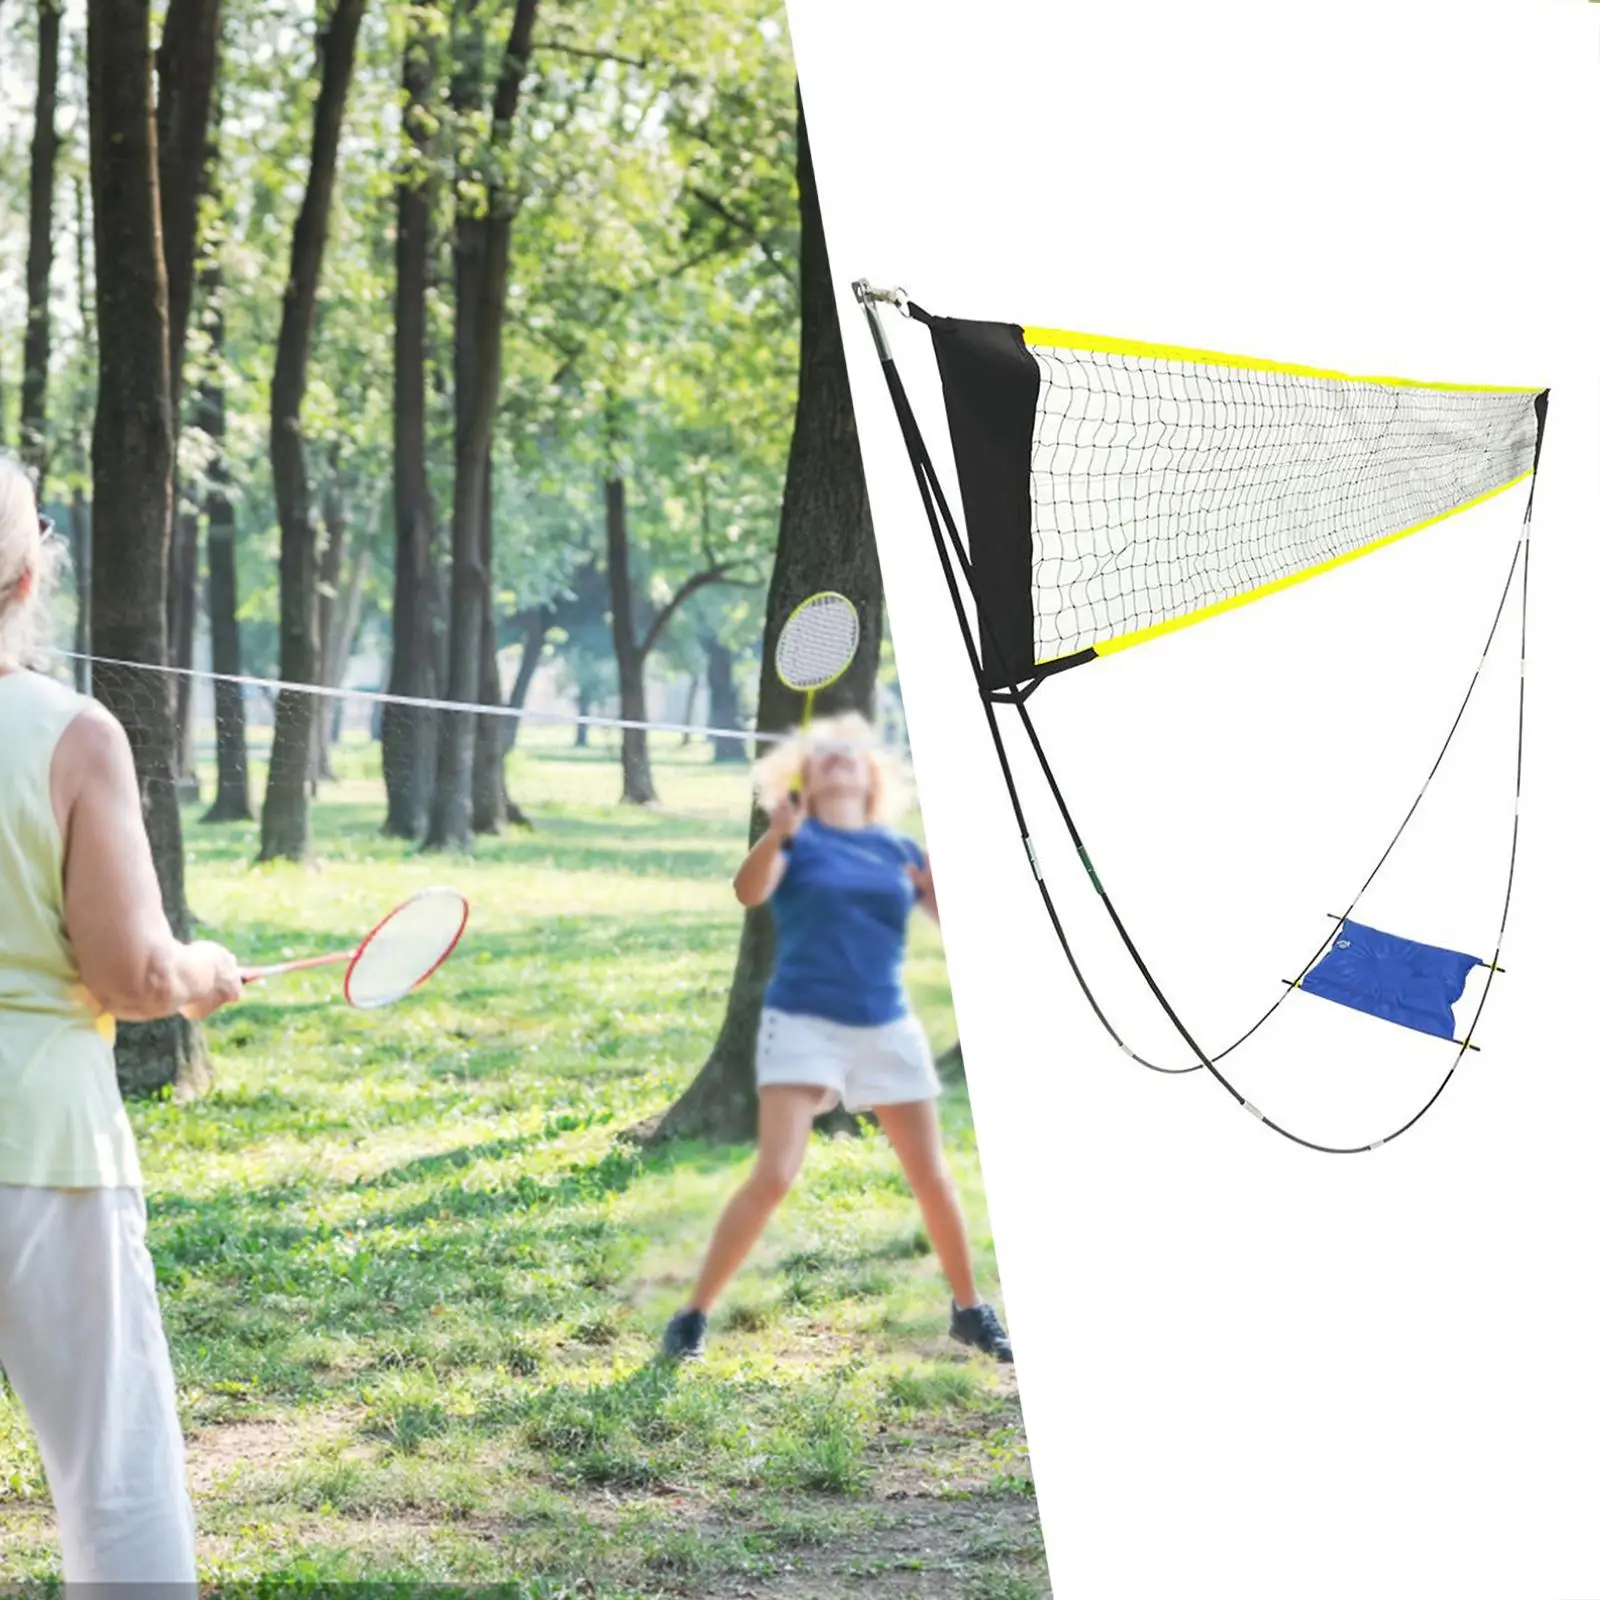 Portable Badminton Net Tennis Net Bracket Portable Heavy Duty with Storage Bag Beach Net Set for Soccer Lawn Outdoor Yard Adult